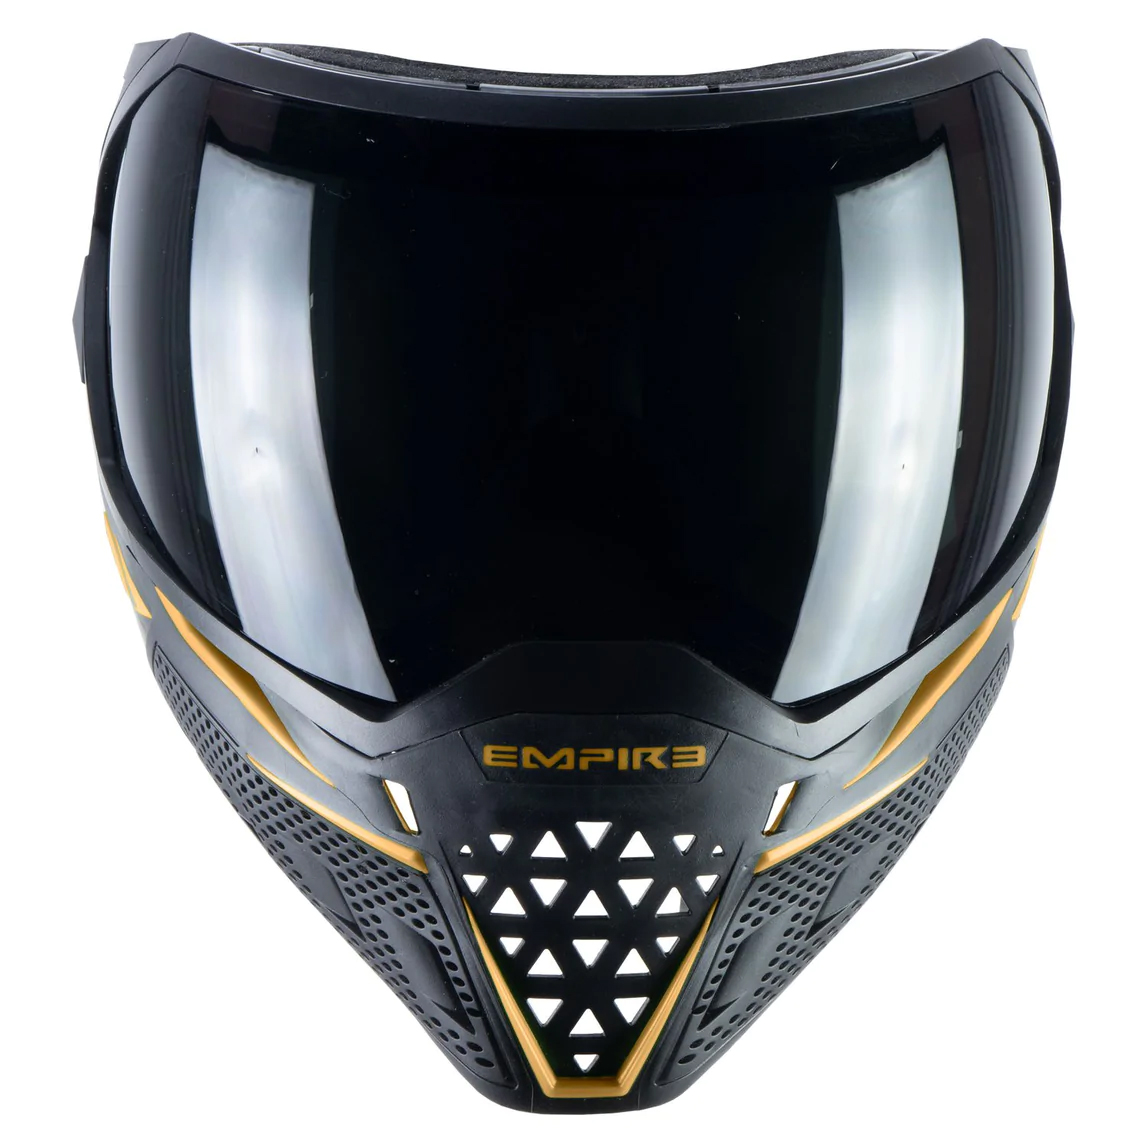 Empire - EVS Mask - Black/Gold